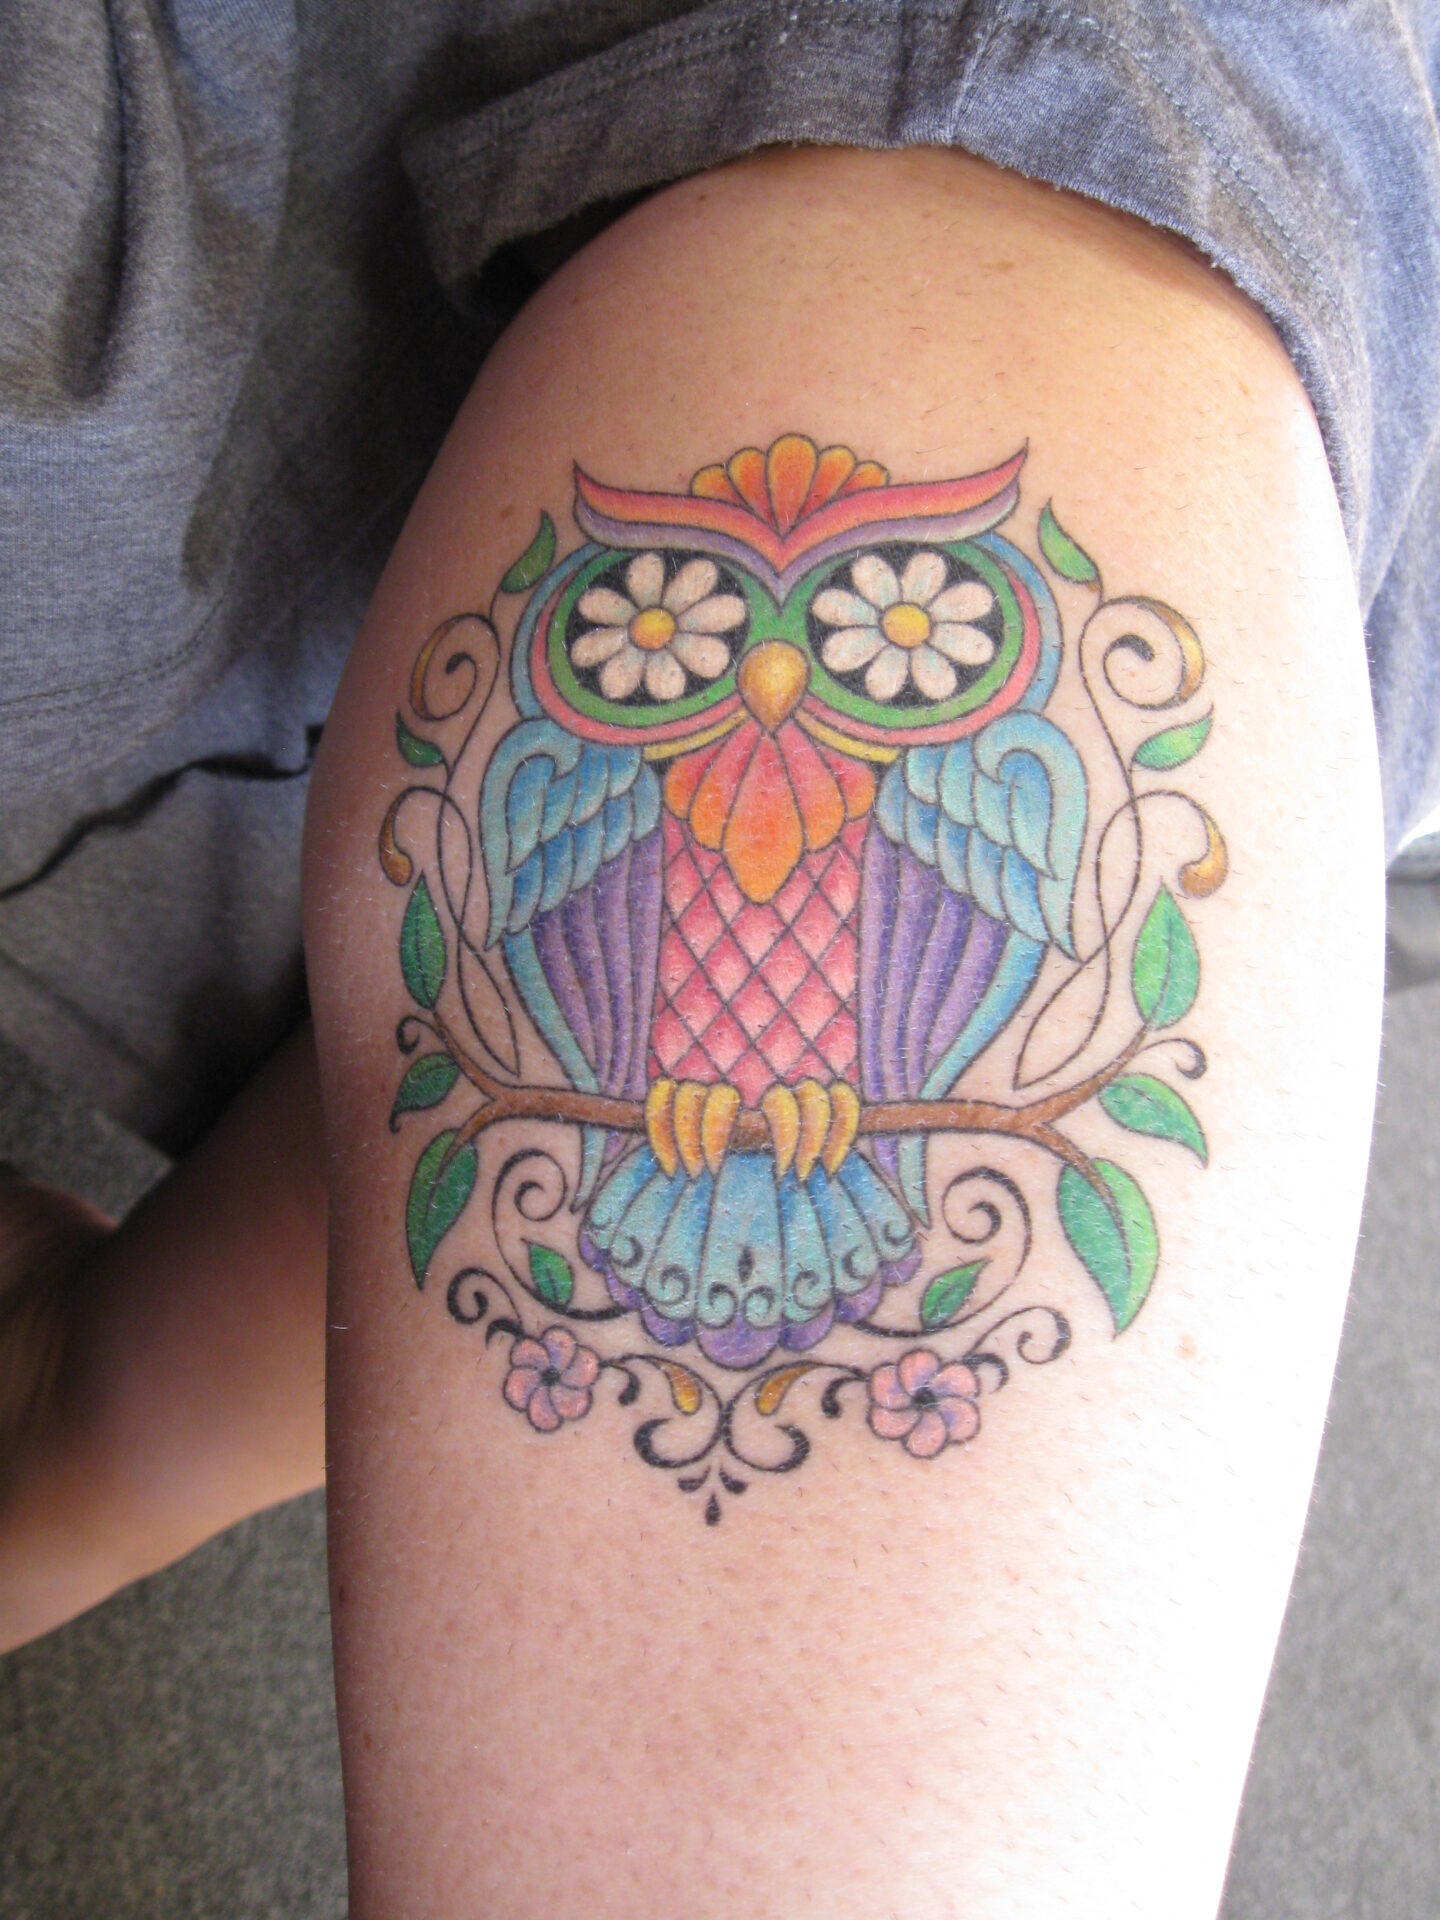 Professional Tattoos in Virginia - Artistically Inklined Studio